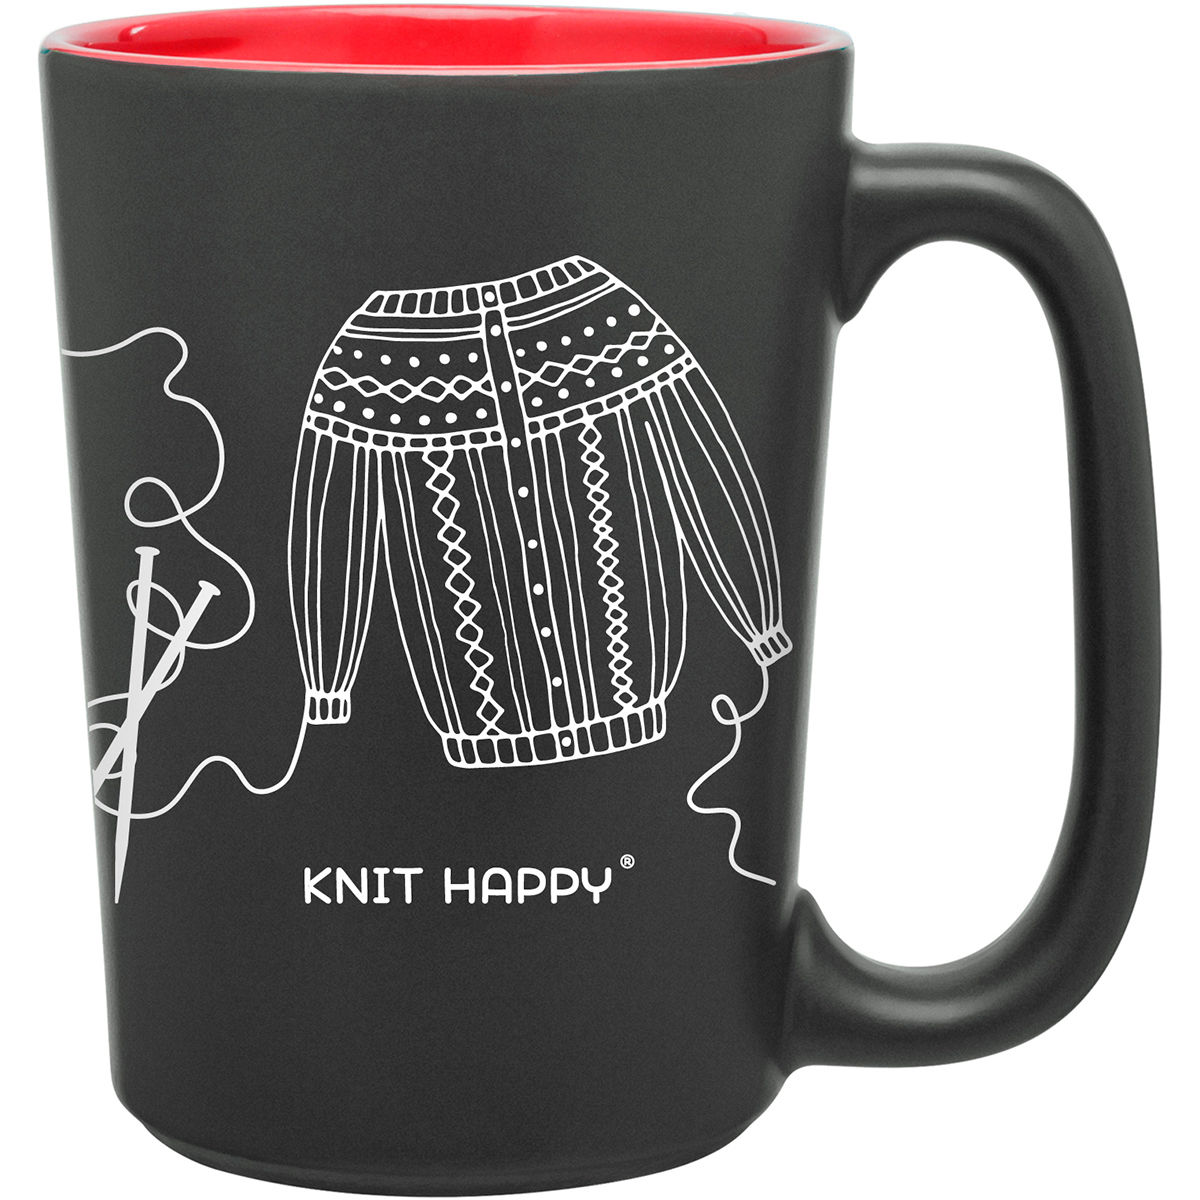 Kh285-re Knit Happy Scribbles Mug - Red